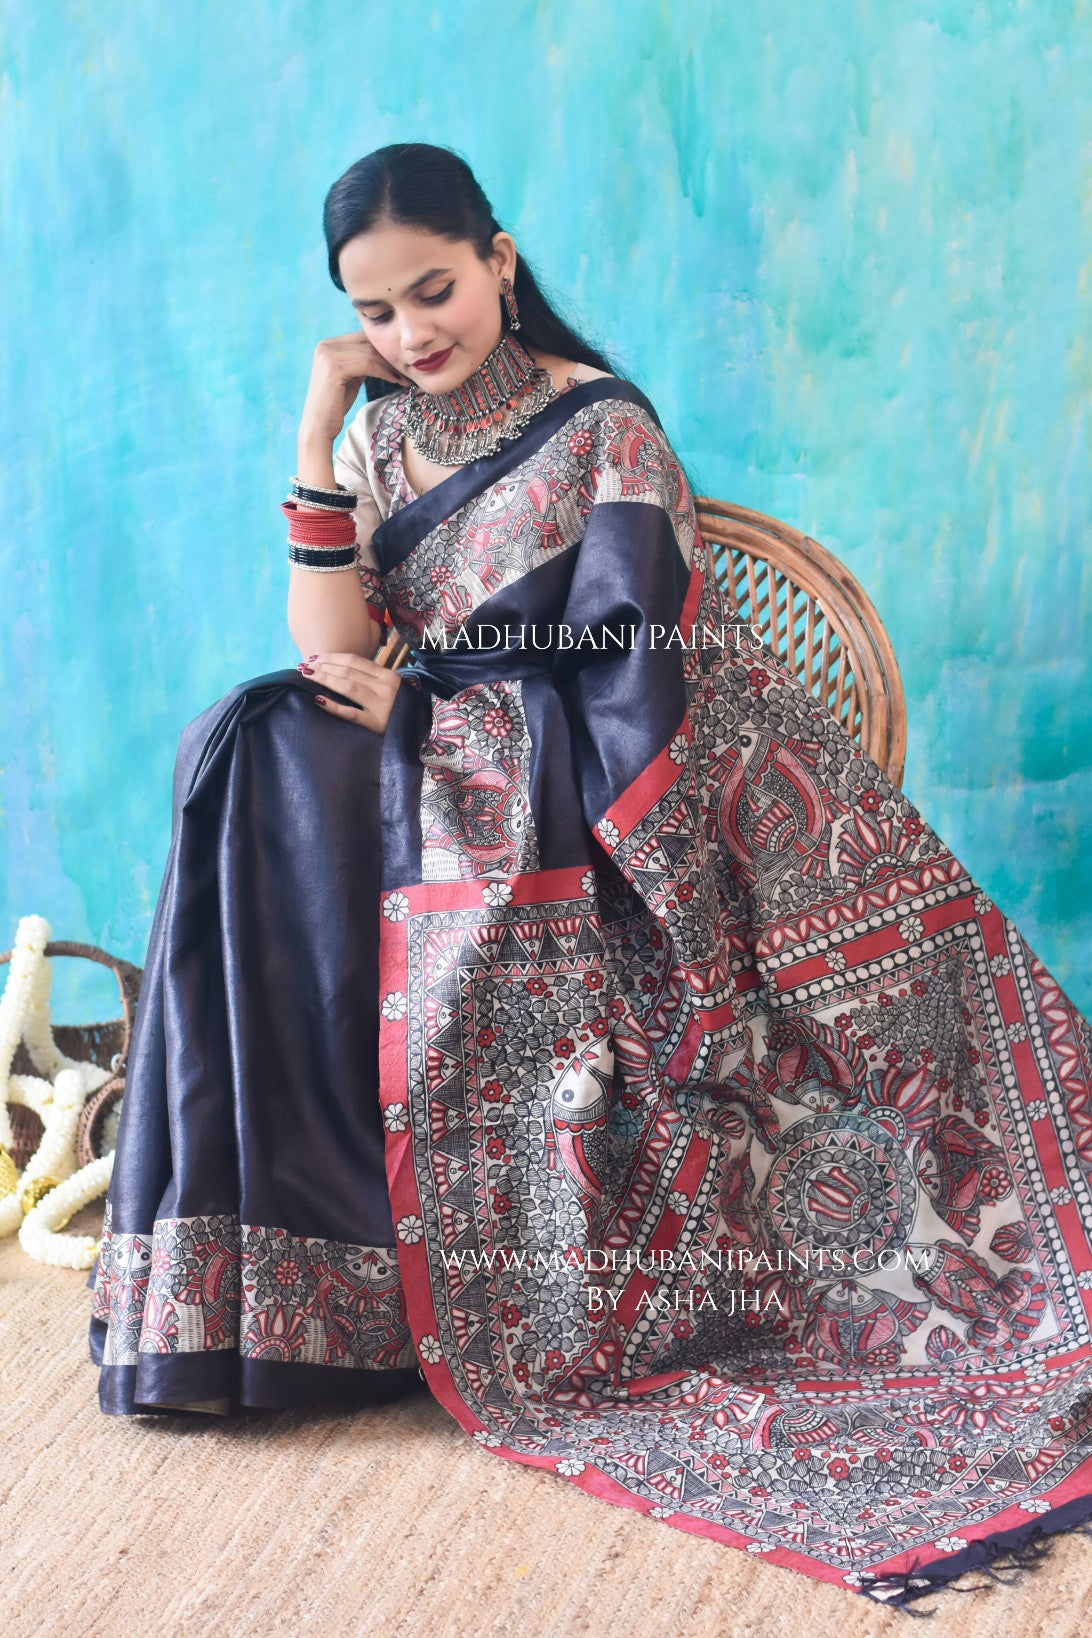 'MATSYA MANJARI' Hand-painted Madhubani Tussar Silk Saree Blouse Set